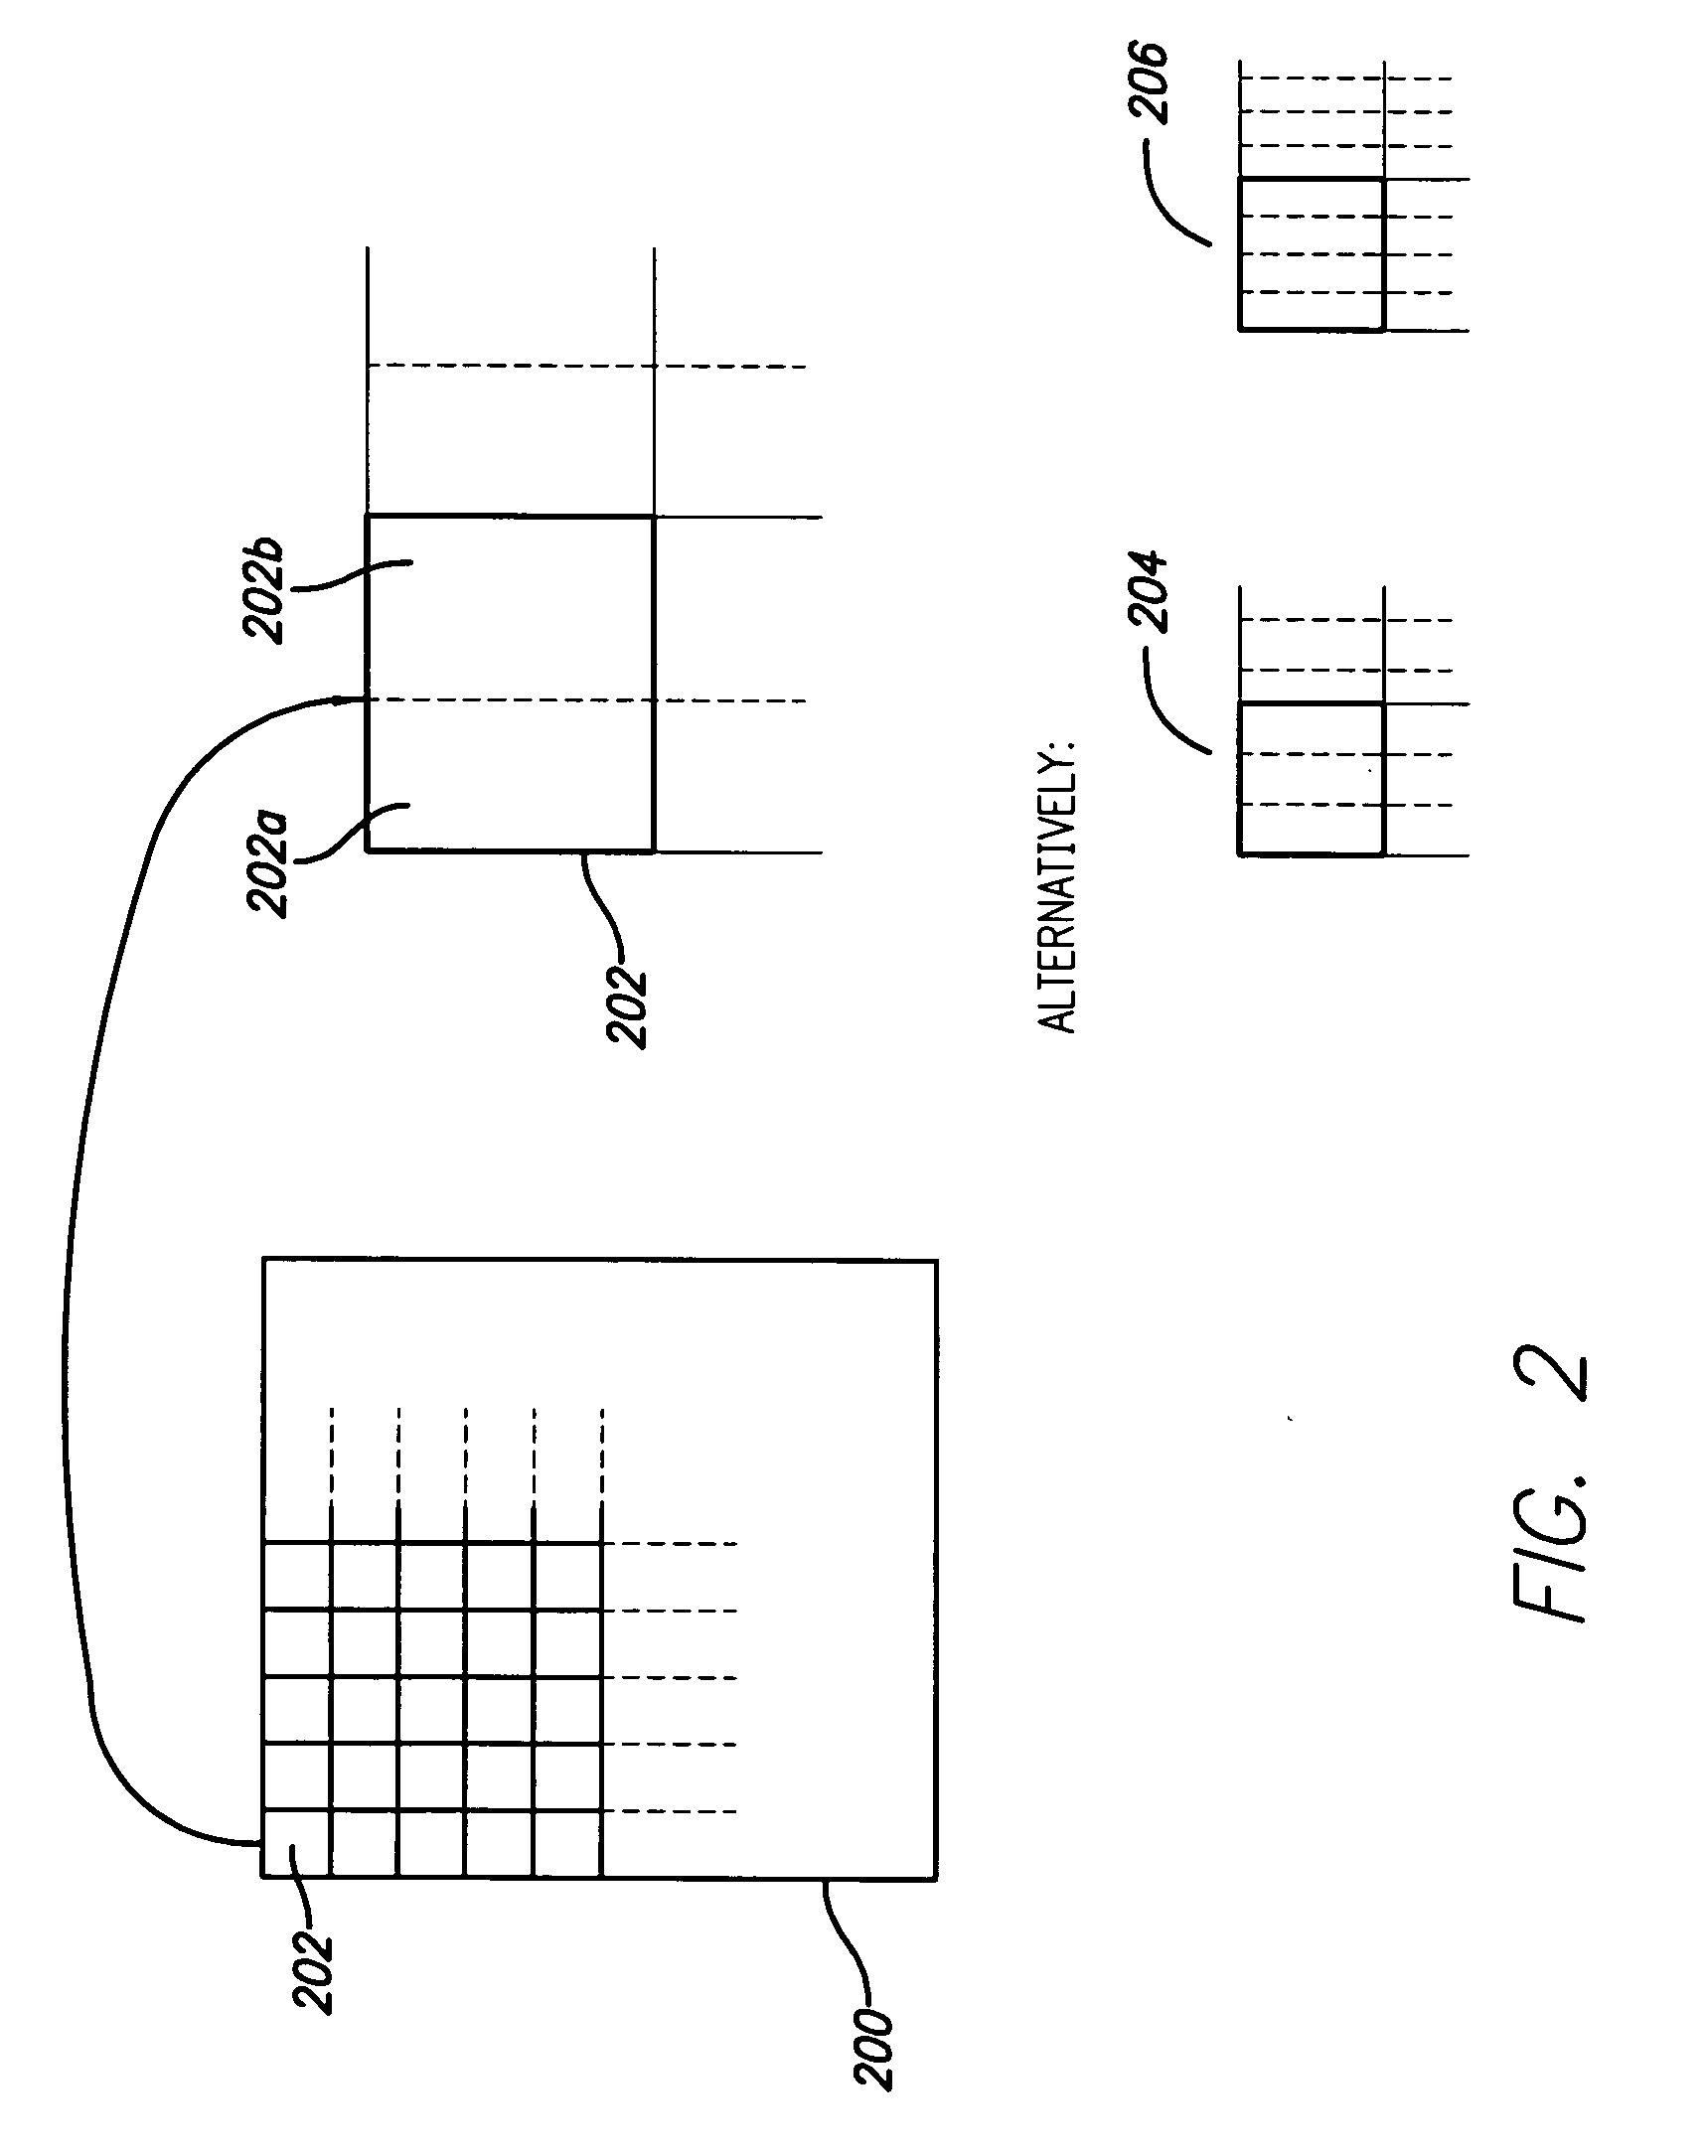 Error diffusion using sub-pixel modulation